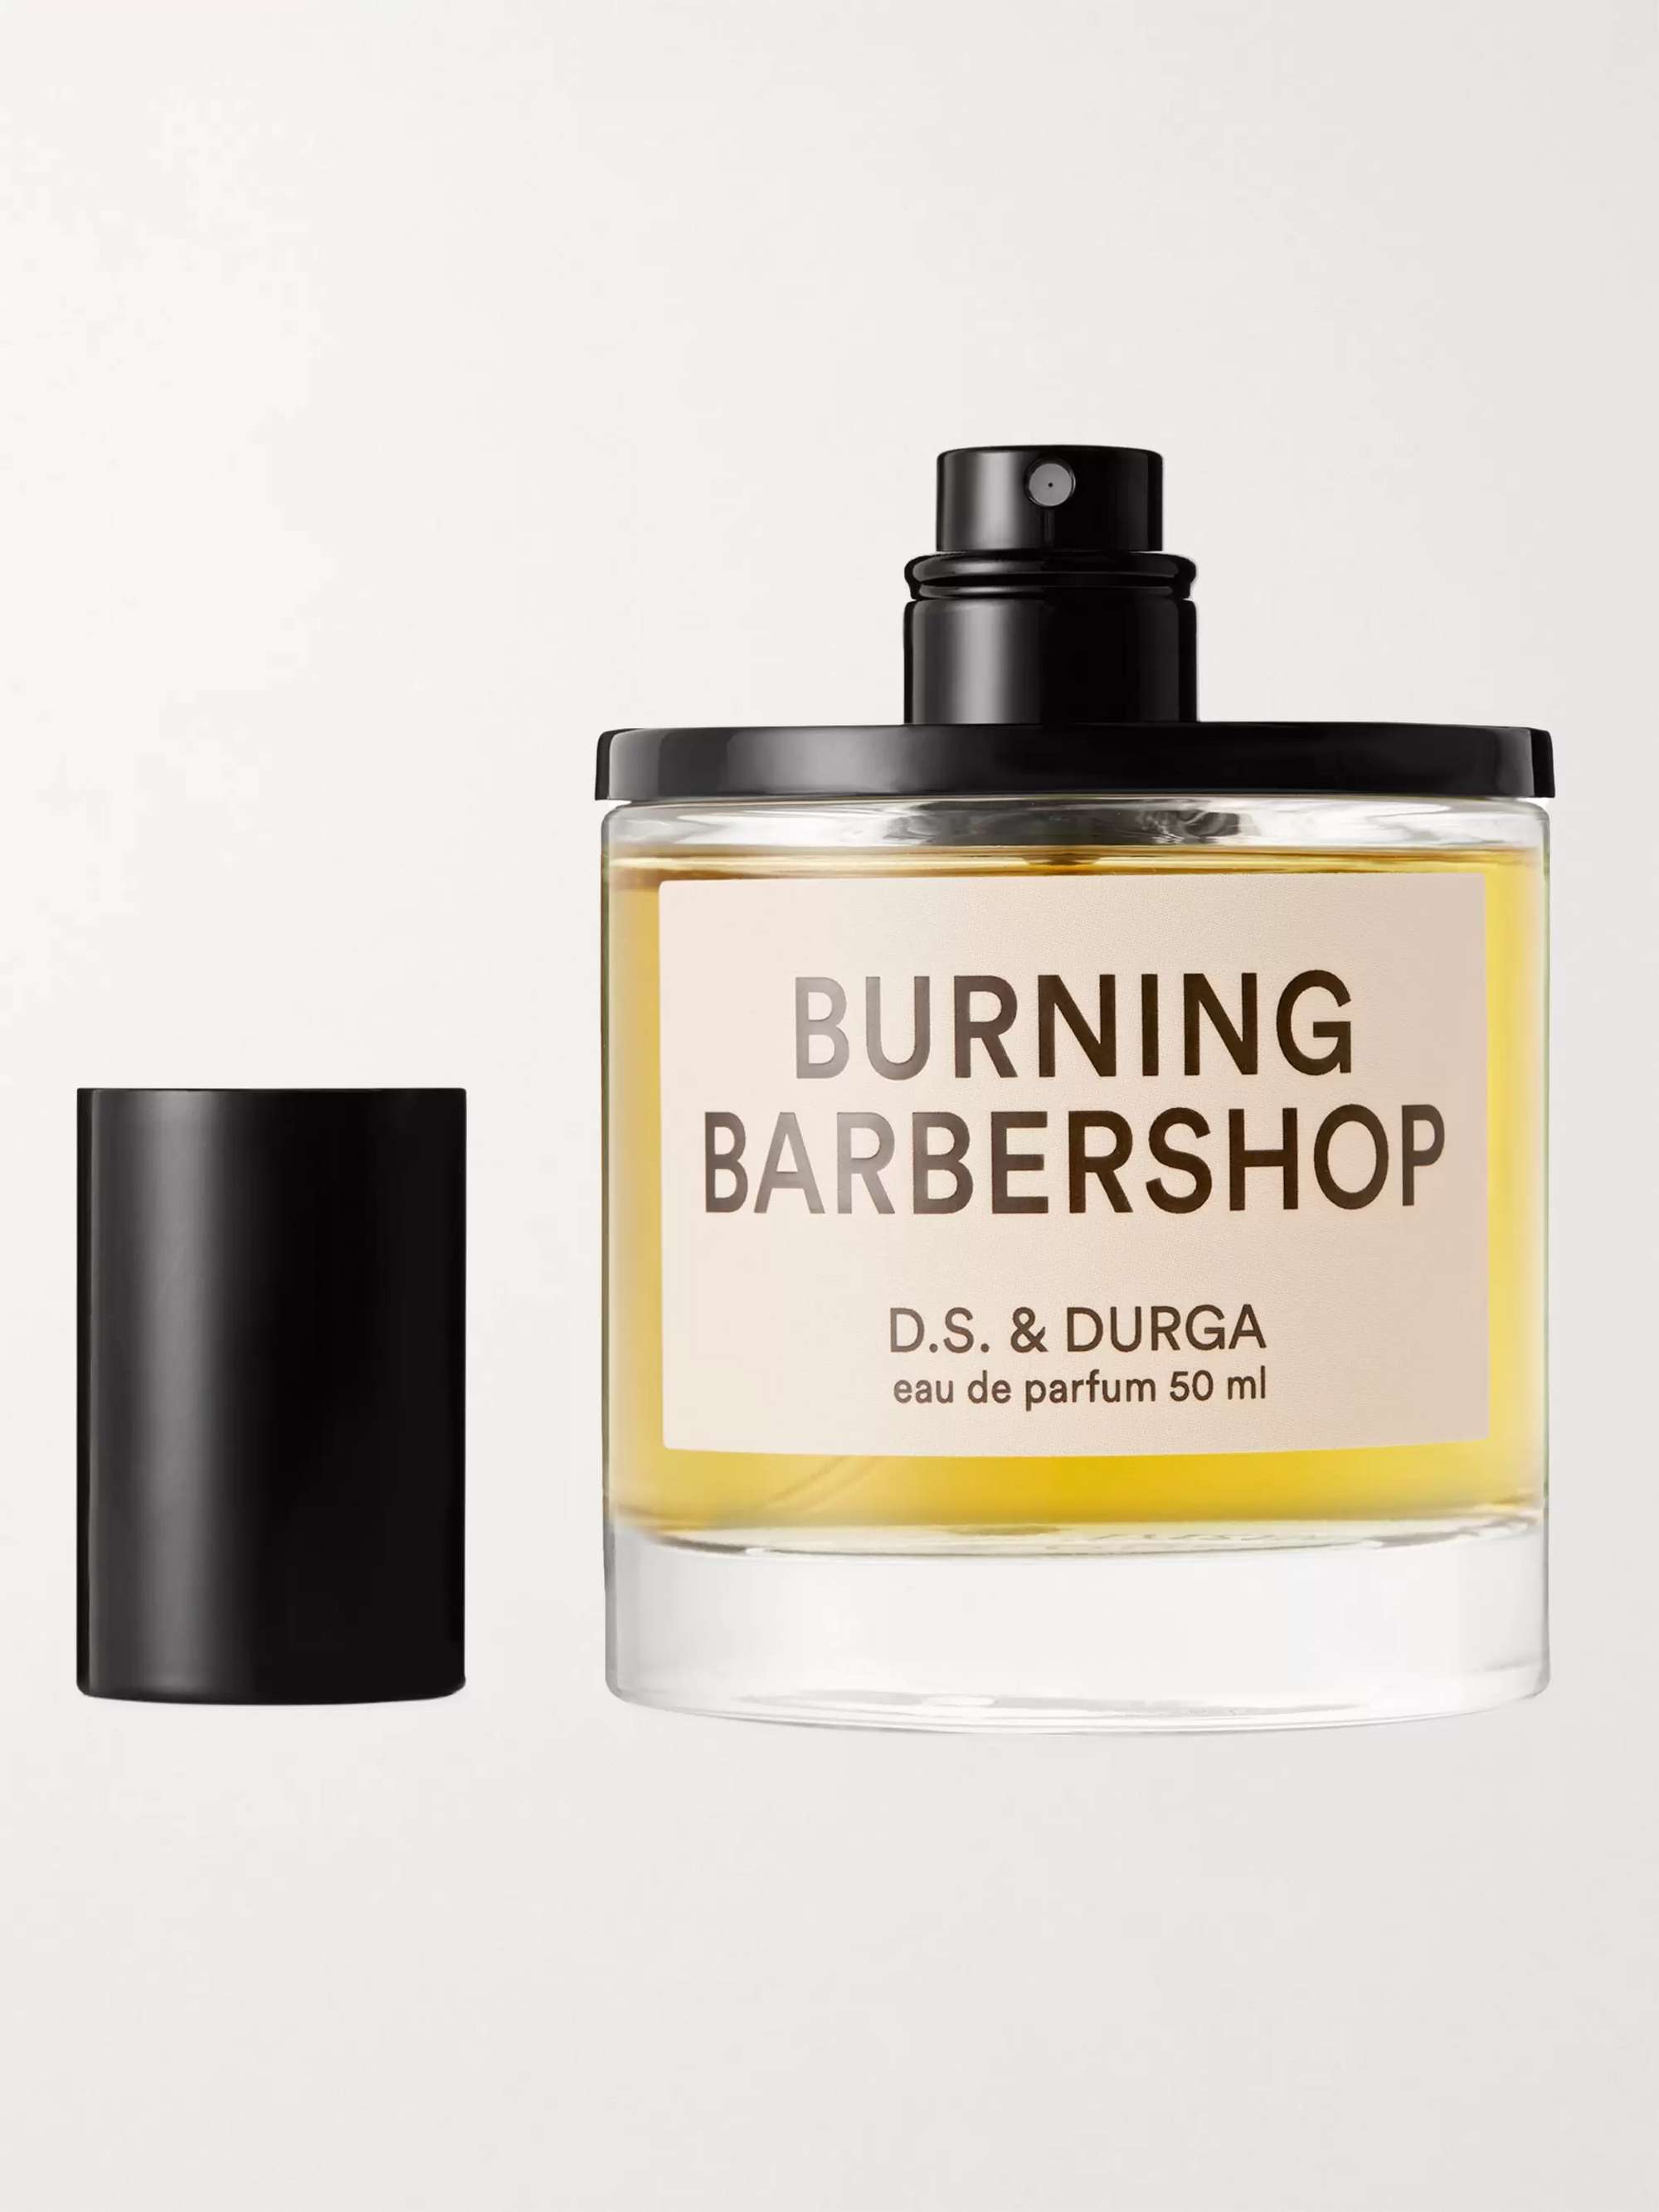 D.S. & DURGA Eau de Parfum - Burning Barbershop, 50ml